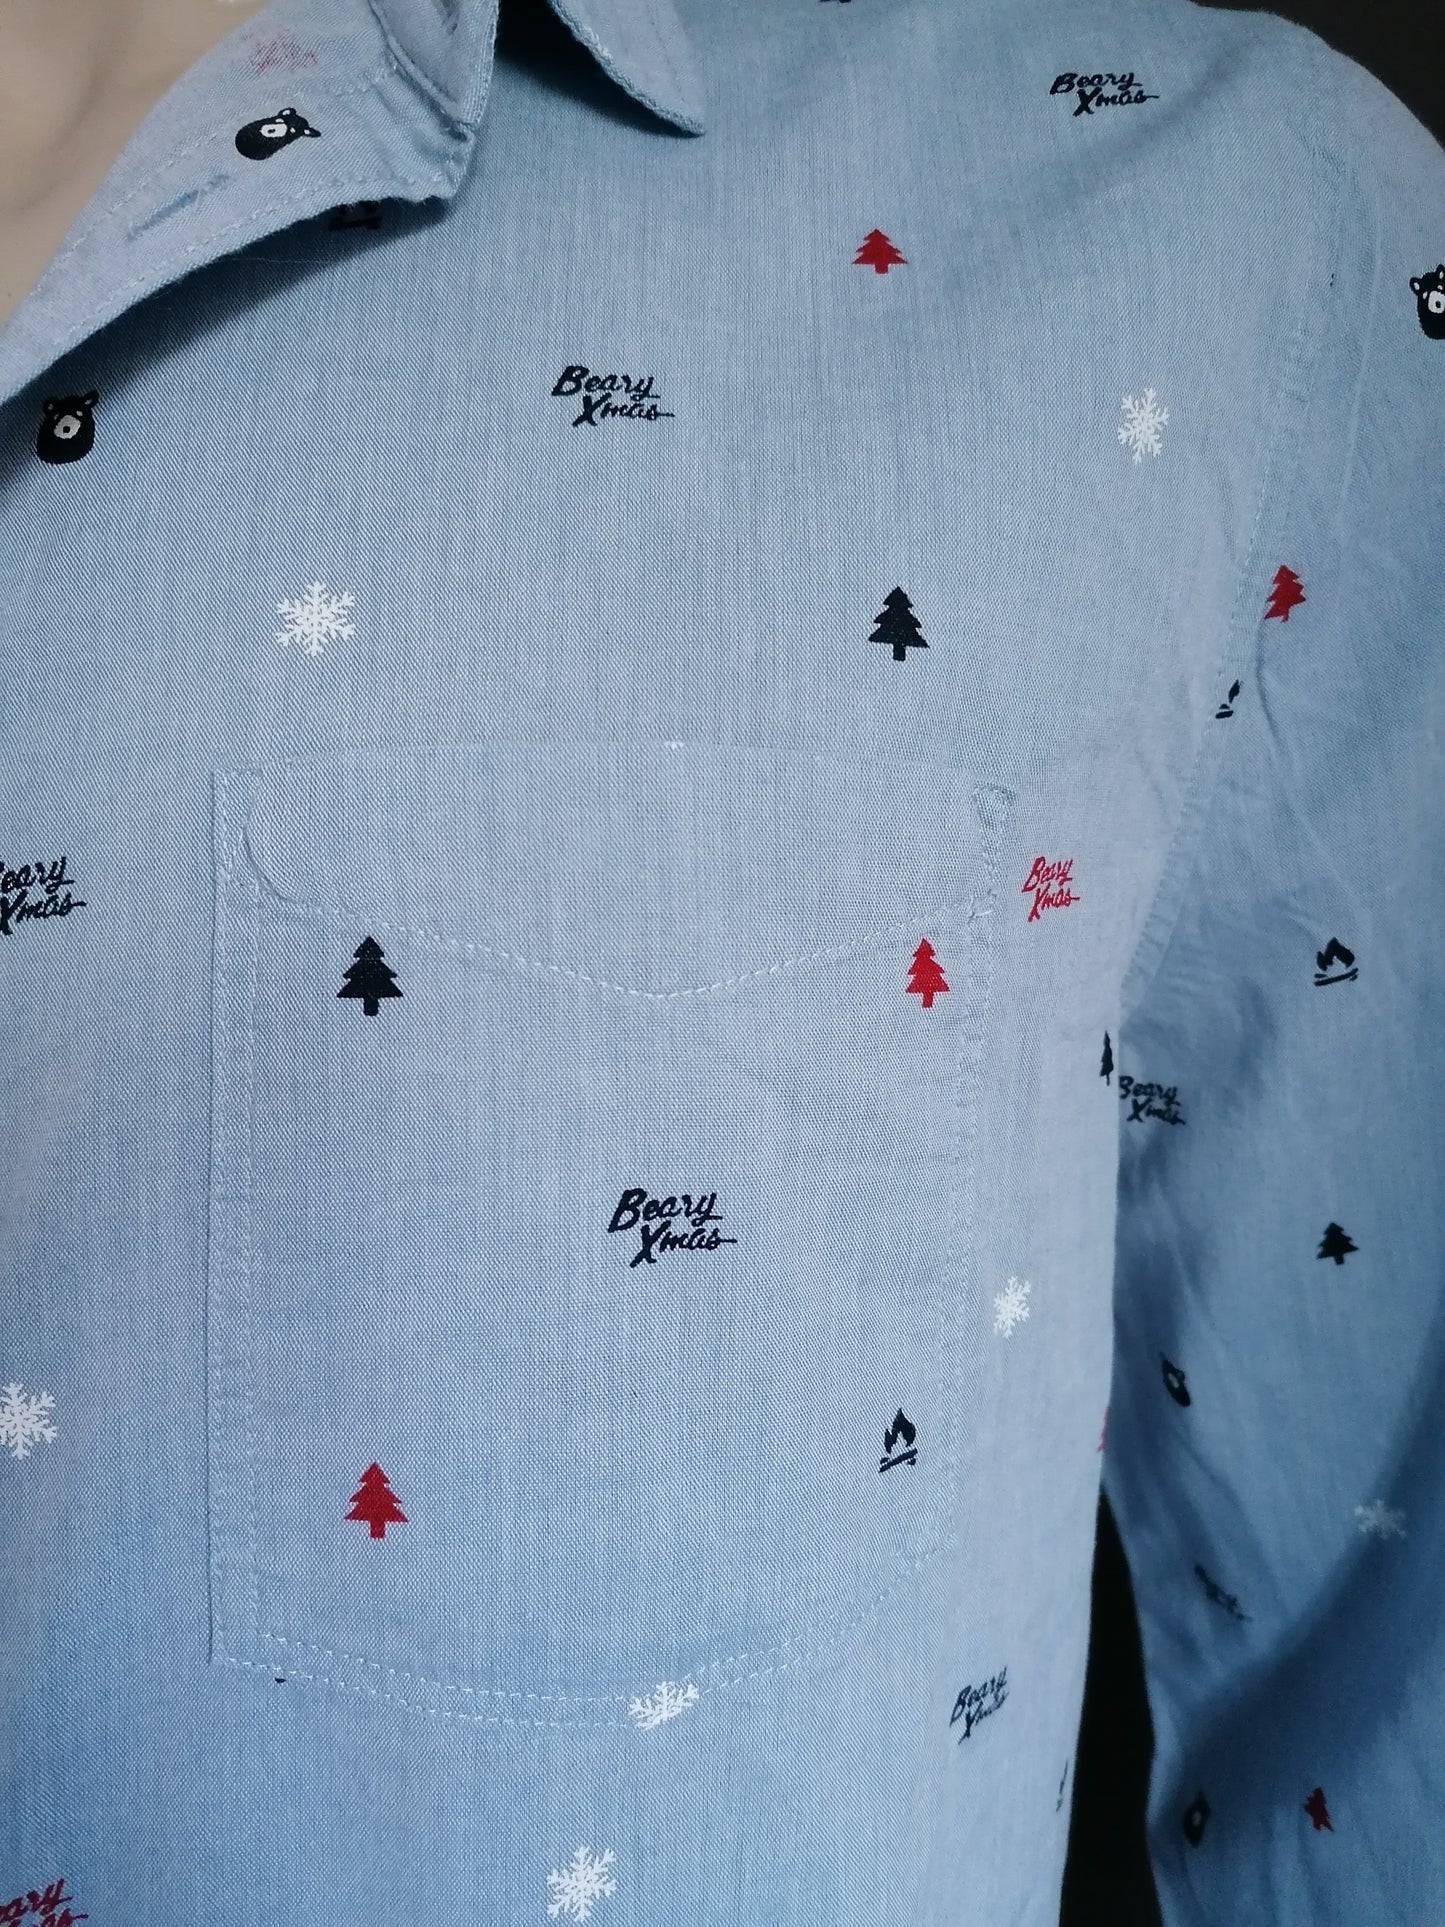 XMas / Kerst / Beary Xmas print overhemd. Licht Blauw. Maat XL.